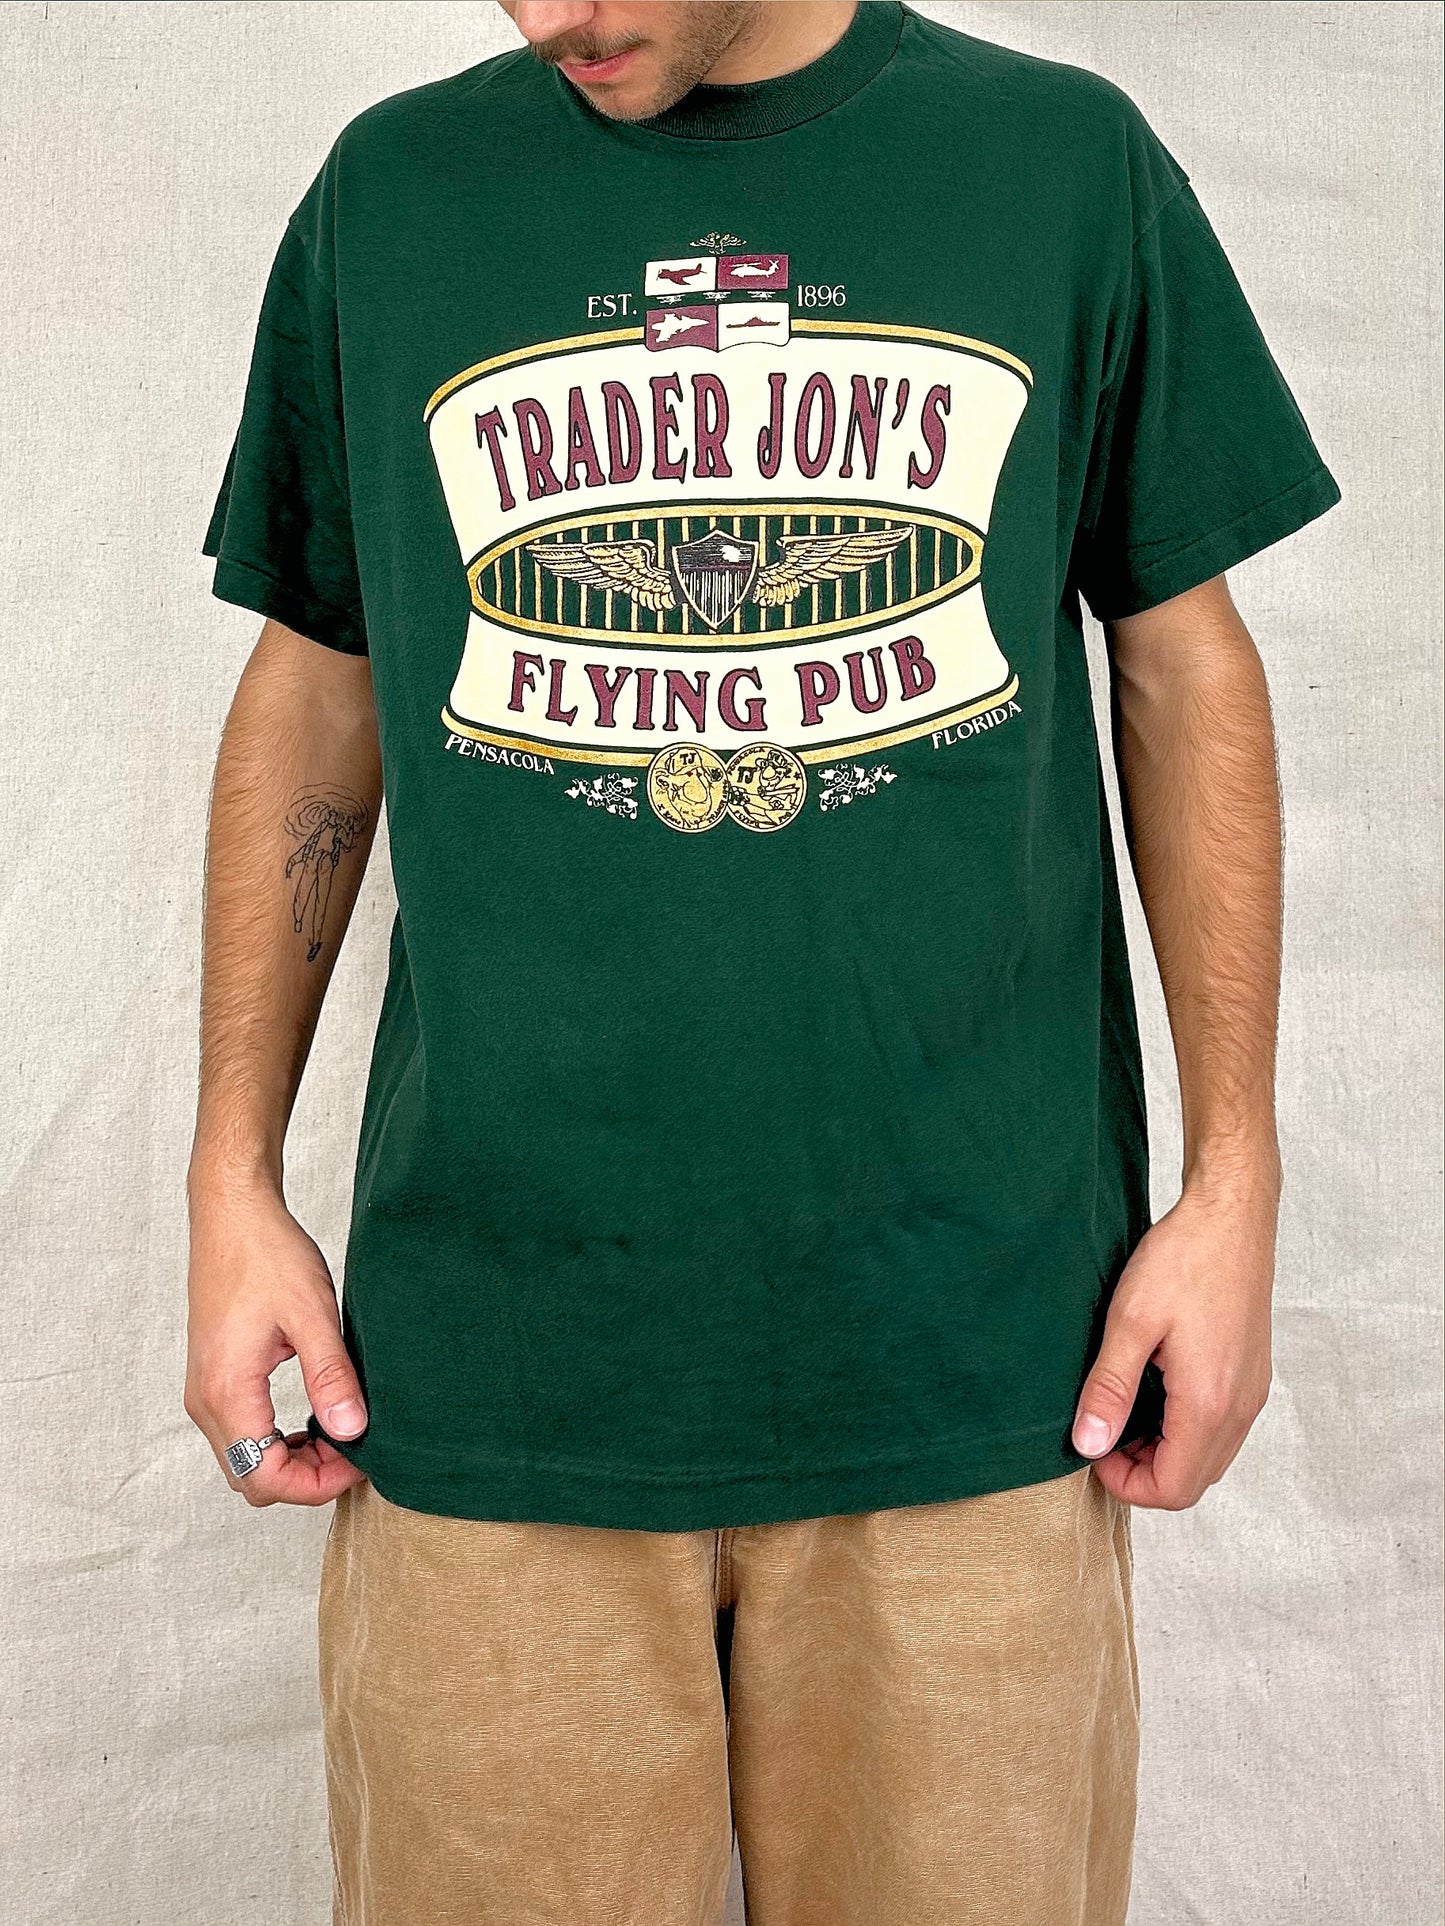 90's Trader Jon's Flying Pub Florida USA Made Vintage T-Shirt Size L